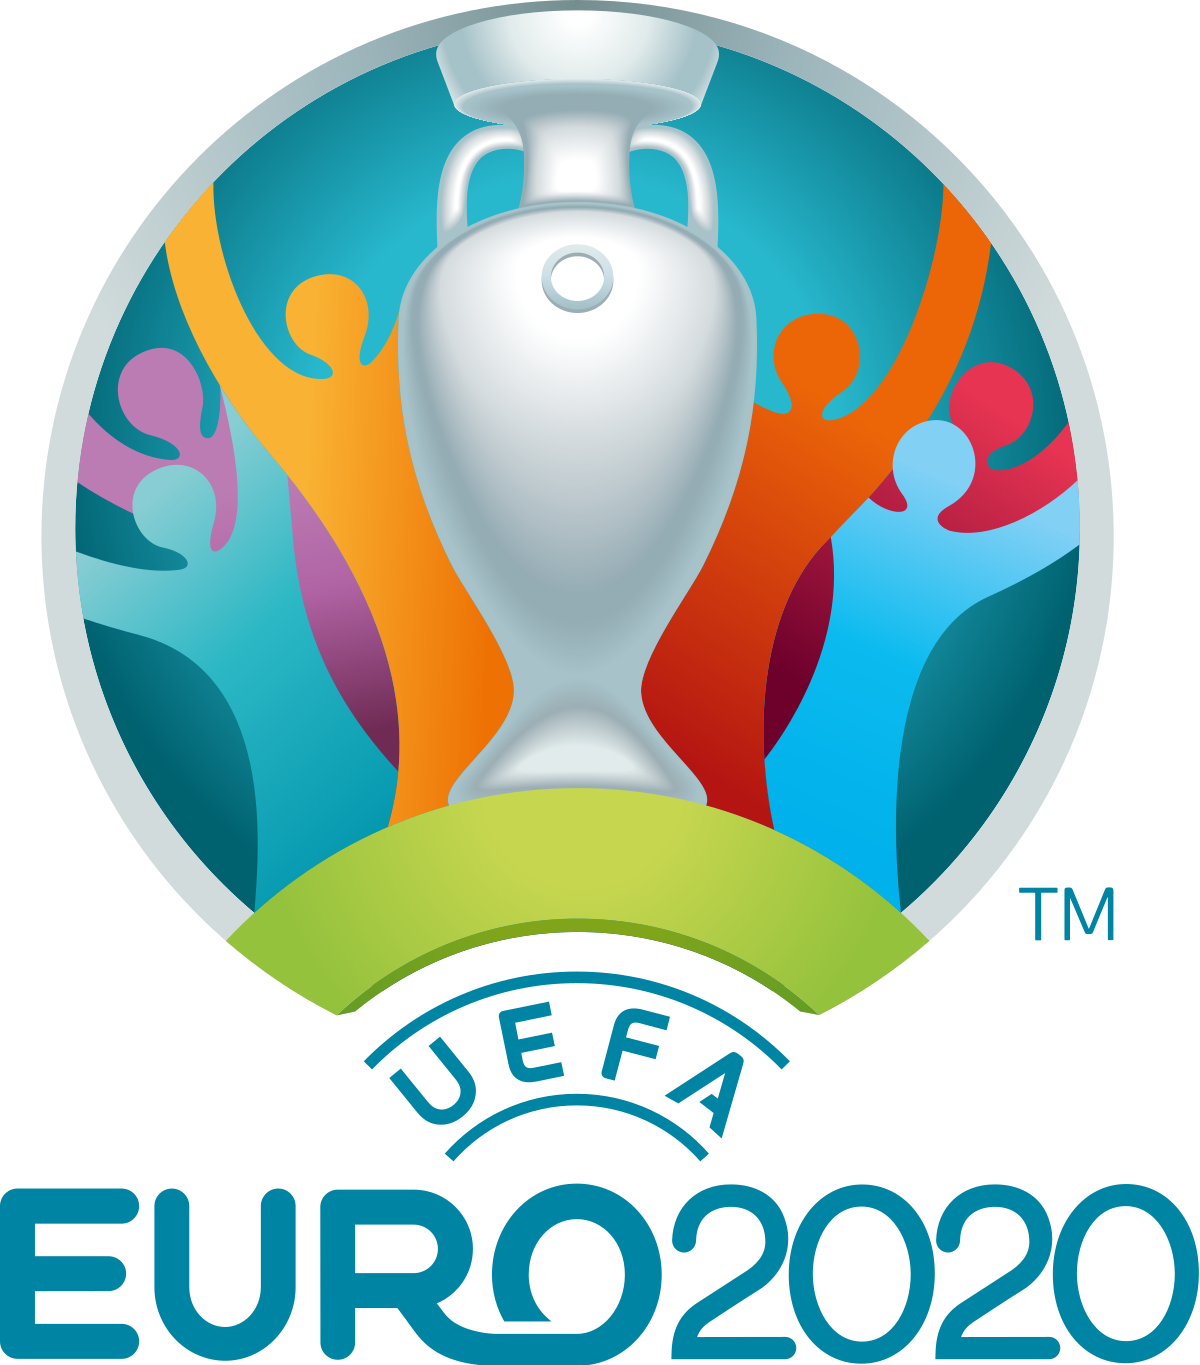 UEFA Euro 2020 | Europe